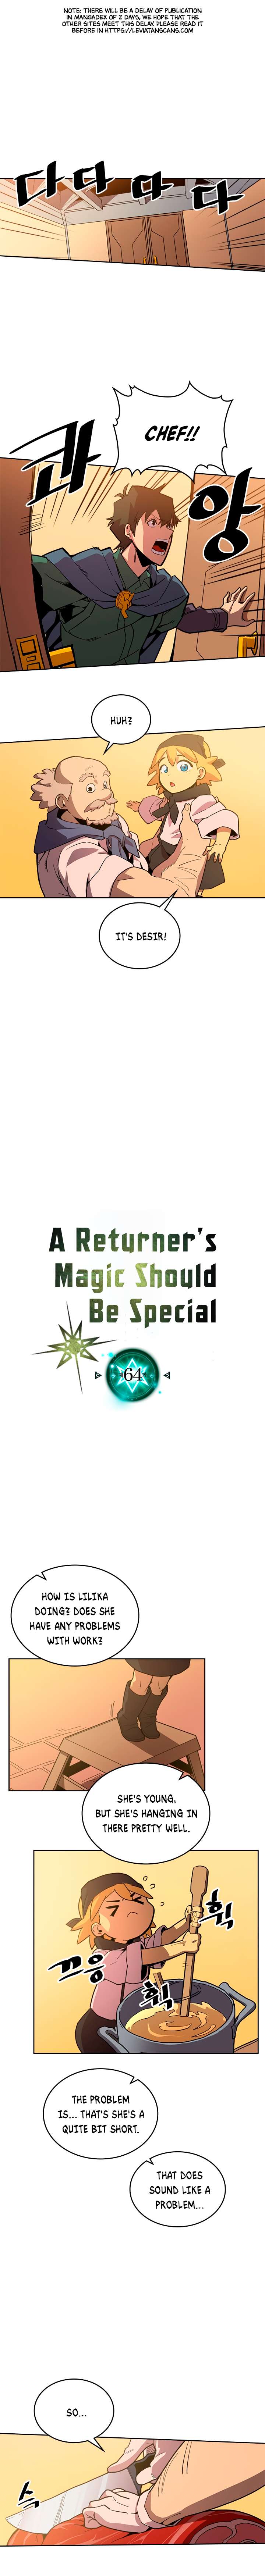 A Returners Magic Should Be Special 64 1